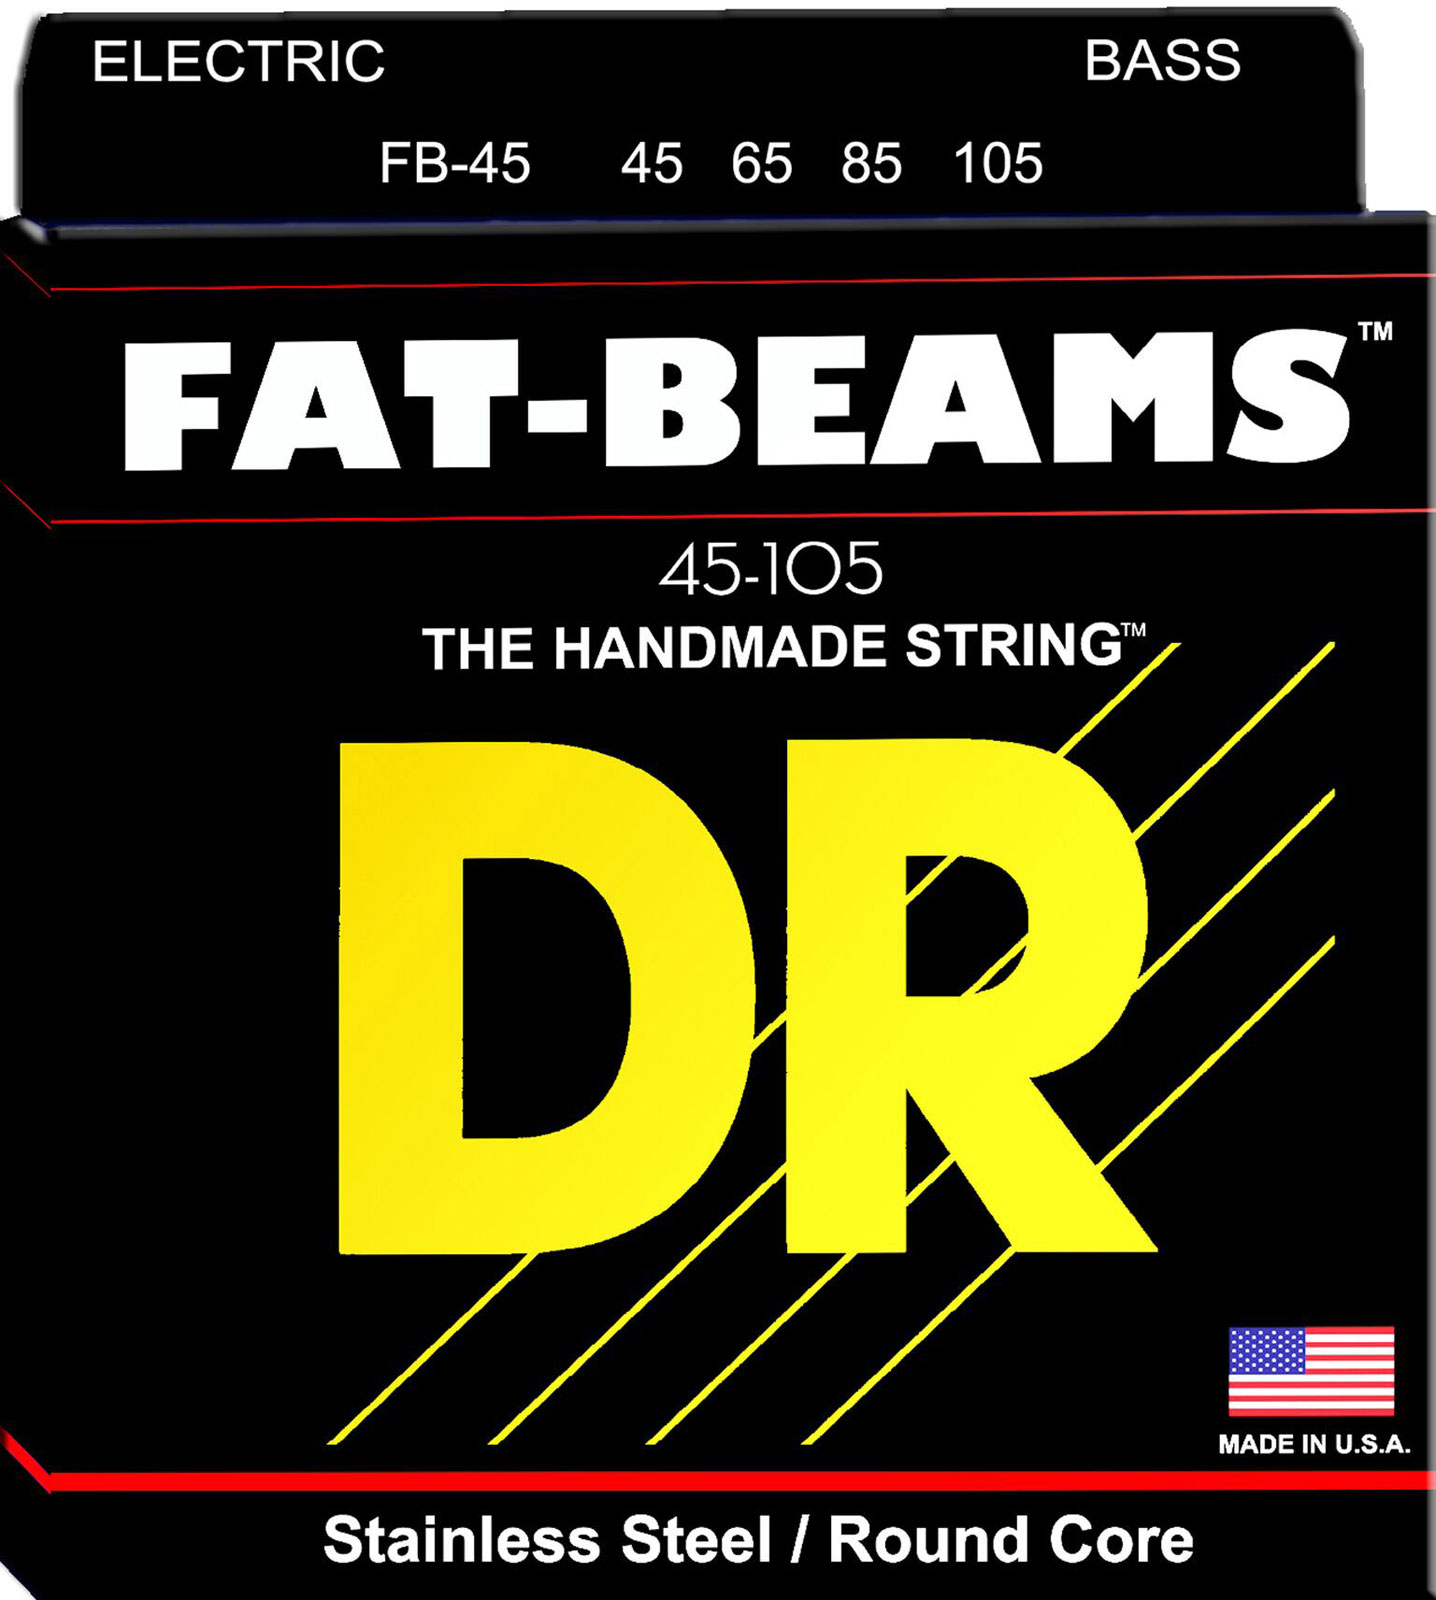 DR STRINGS FB-45 FAT-BEAMS 45-105